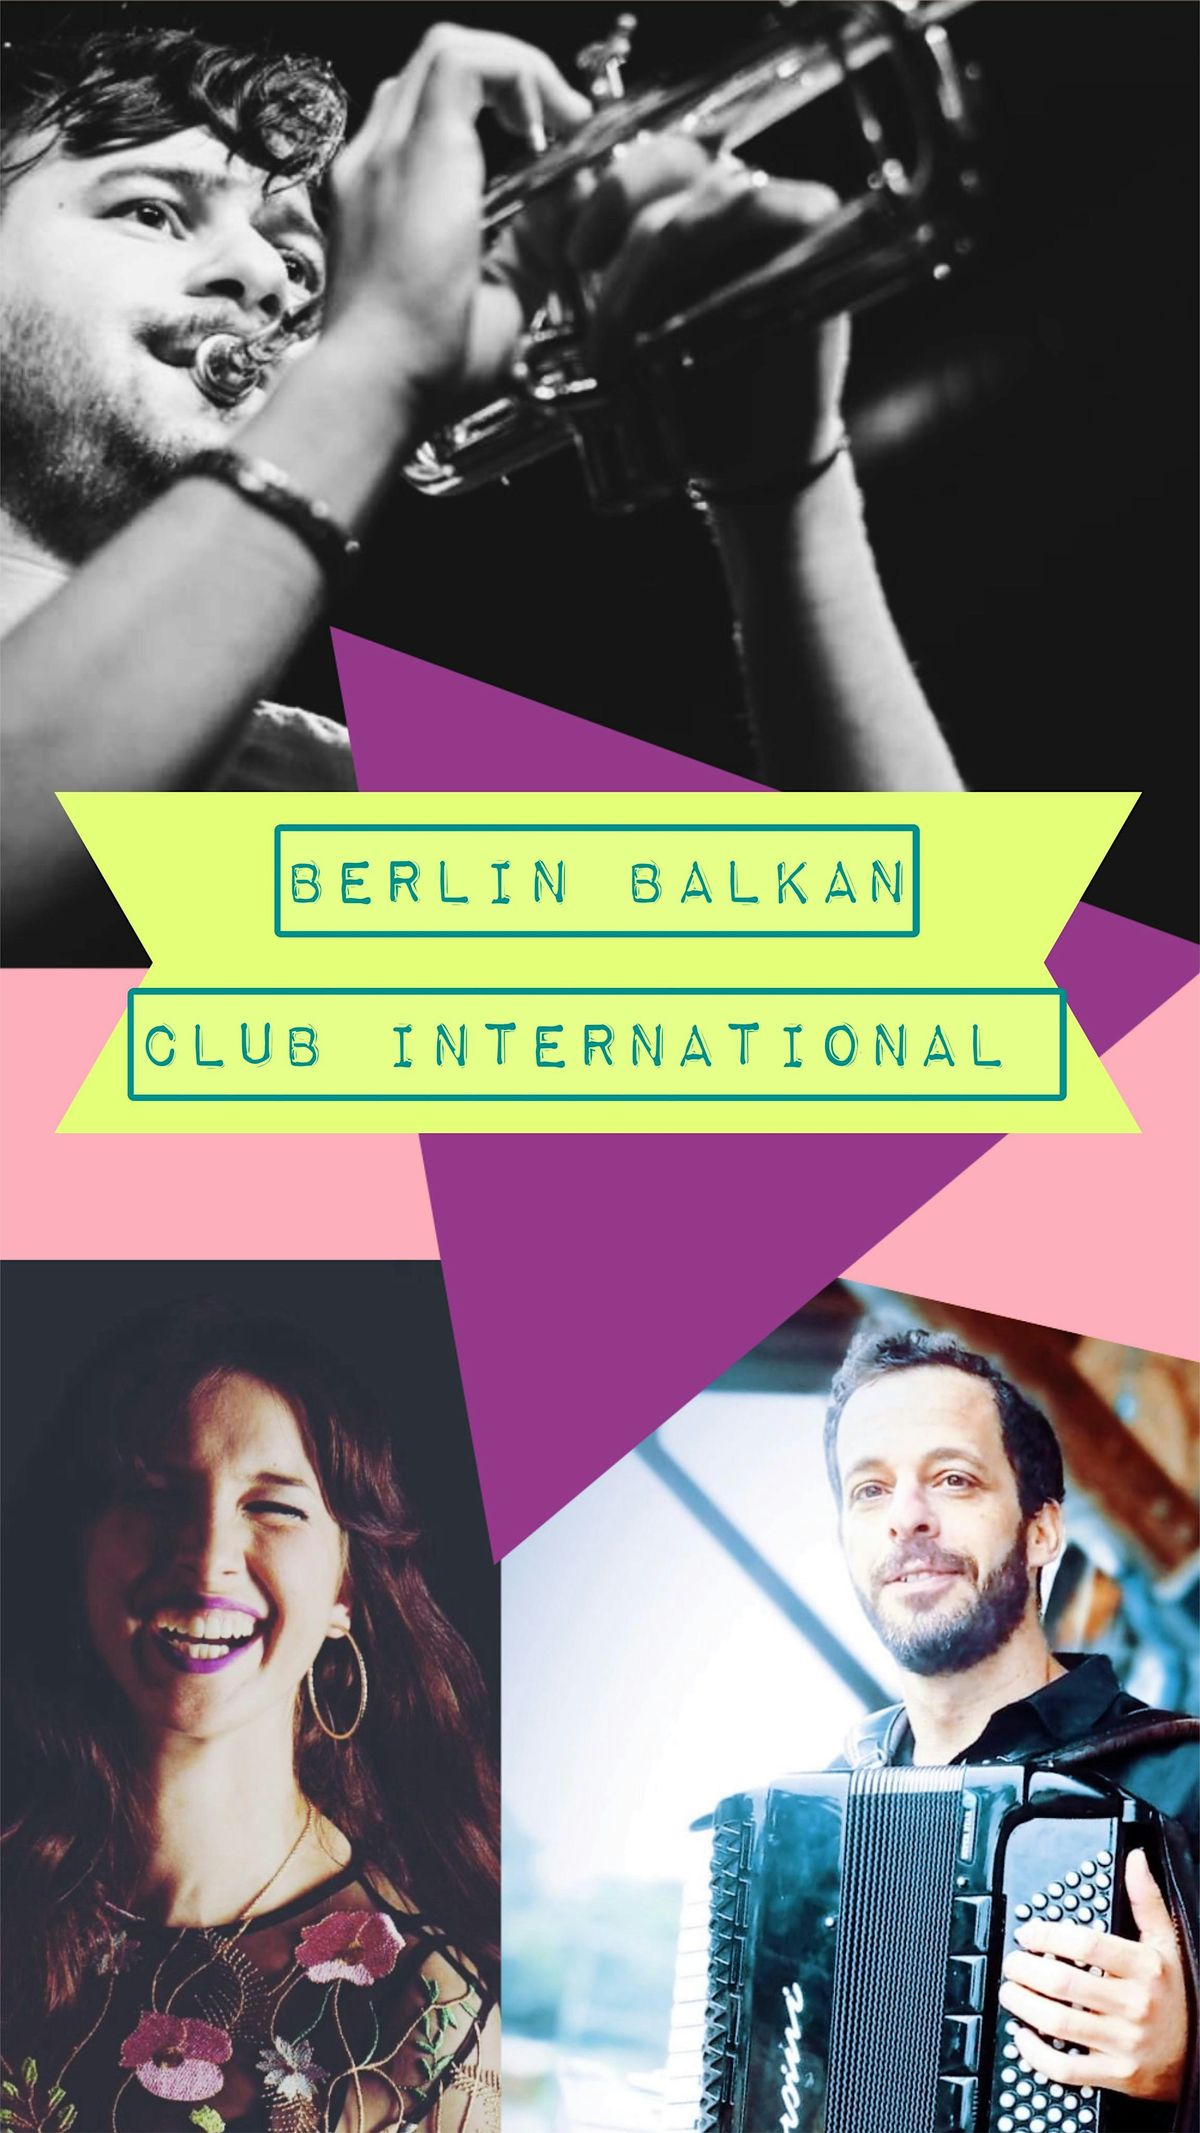 Berlin Balkan Club International